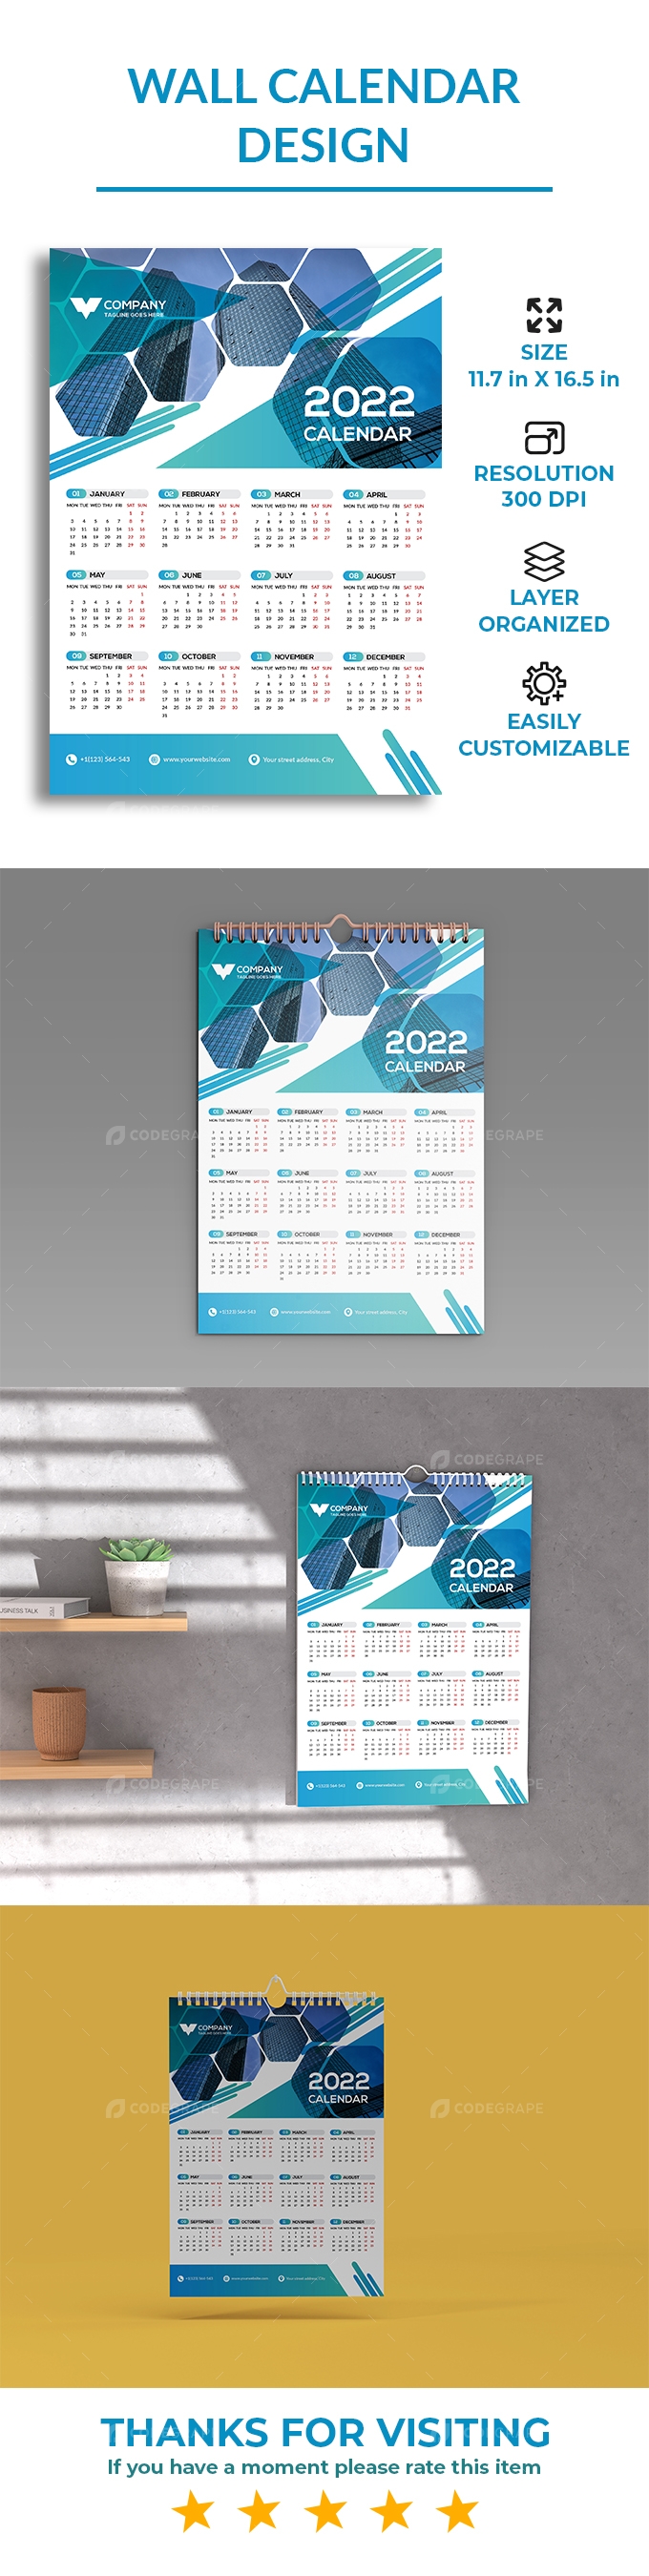 Single Page Wall Calendar Design